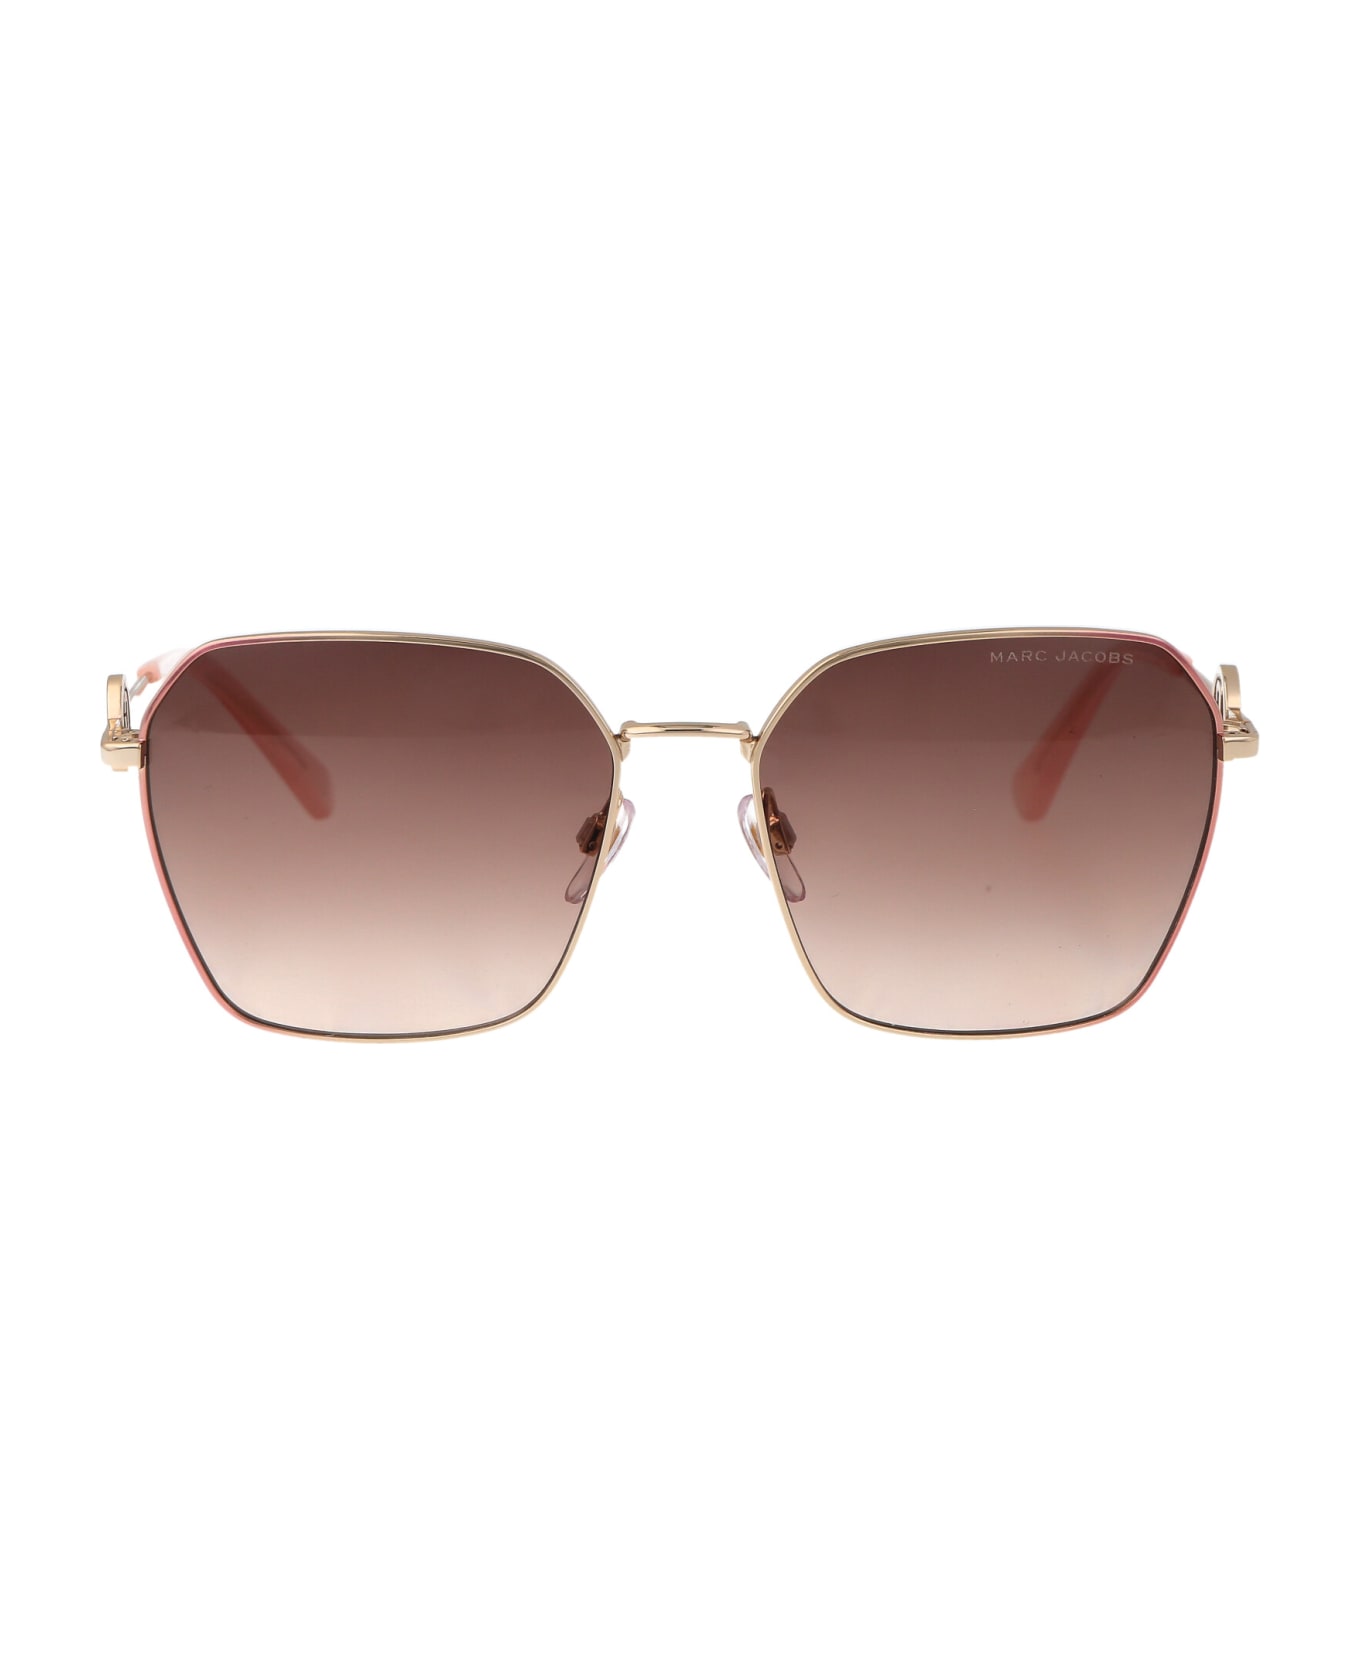 Marc Jacobs Eyewear Marc 729/s Sunglasses - EYRHA GOLD PINK